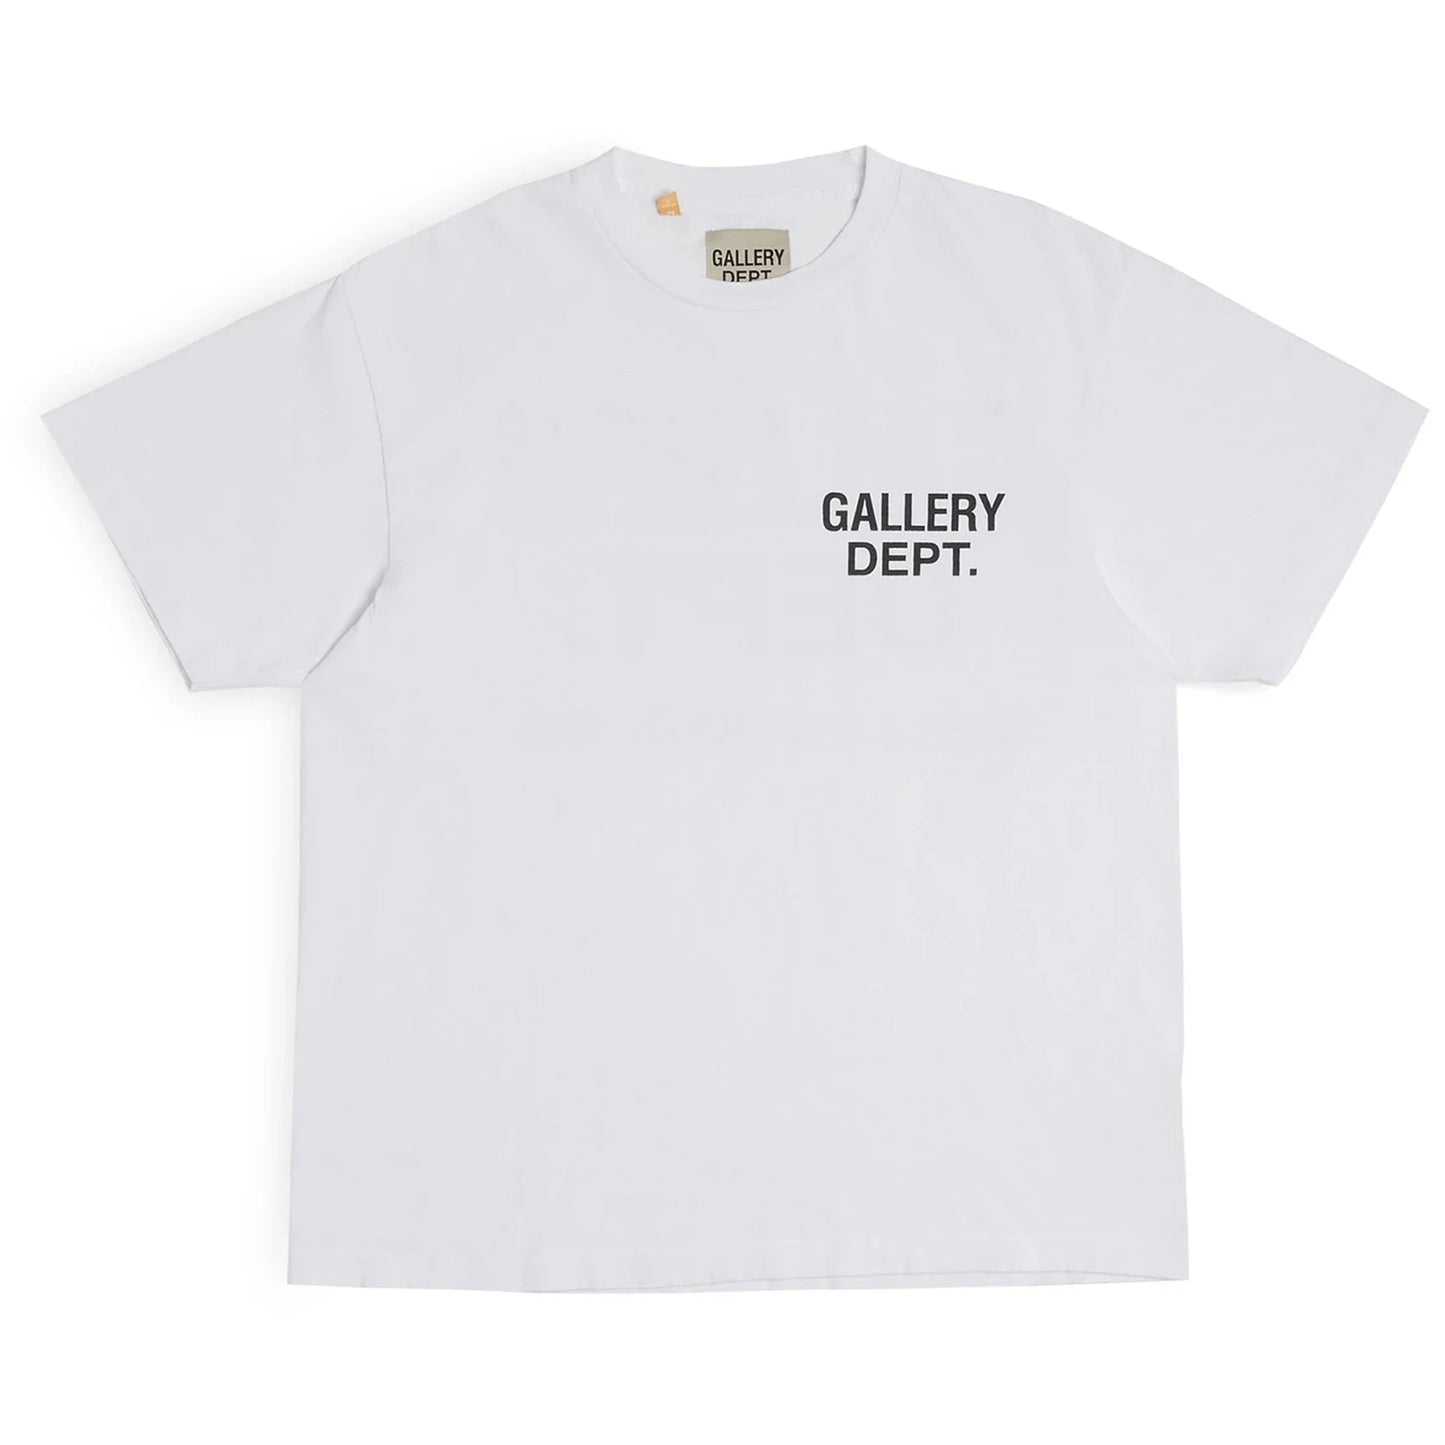 Gallery Dept. Souvenir T-shirt White - Sneakersbe Sneakers Sale Online